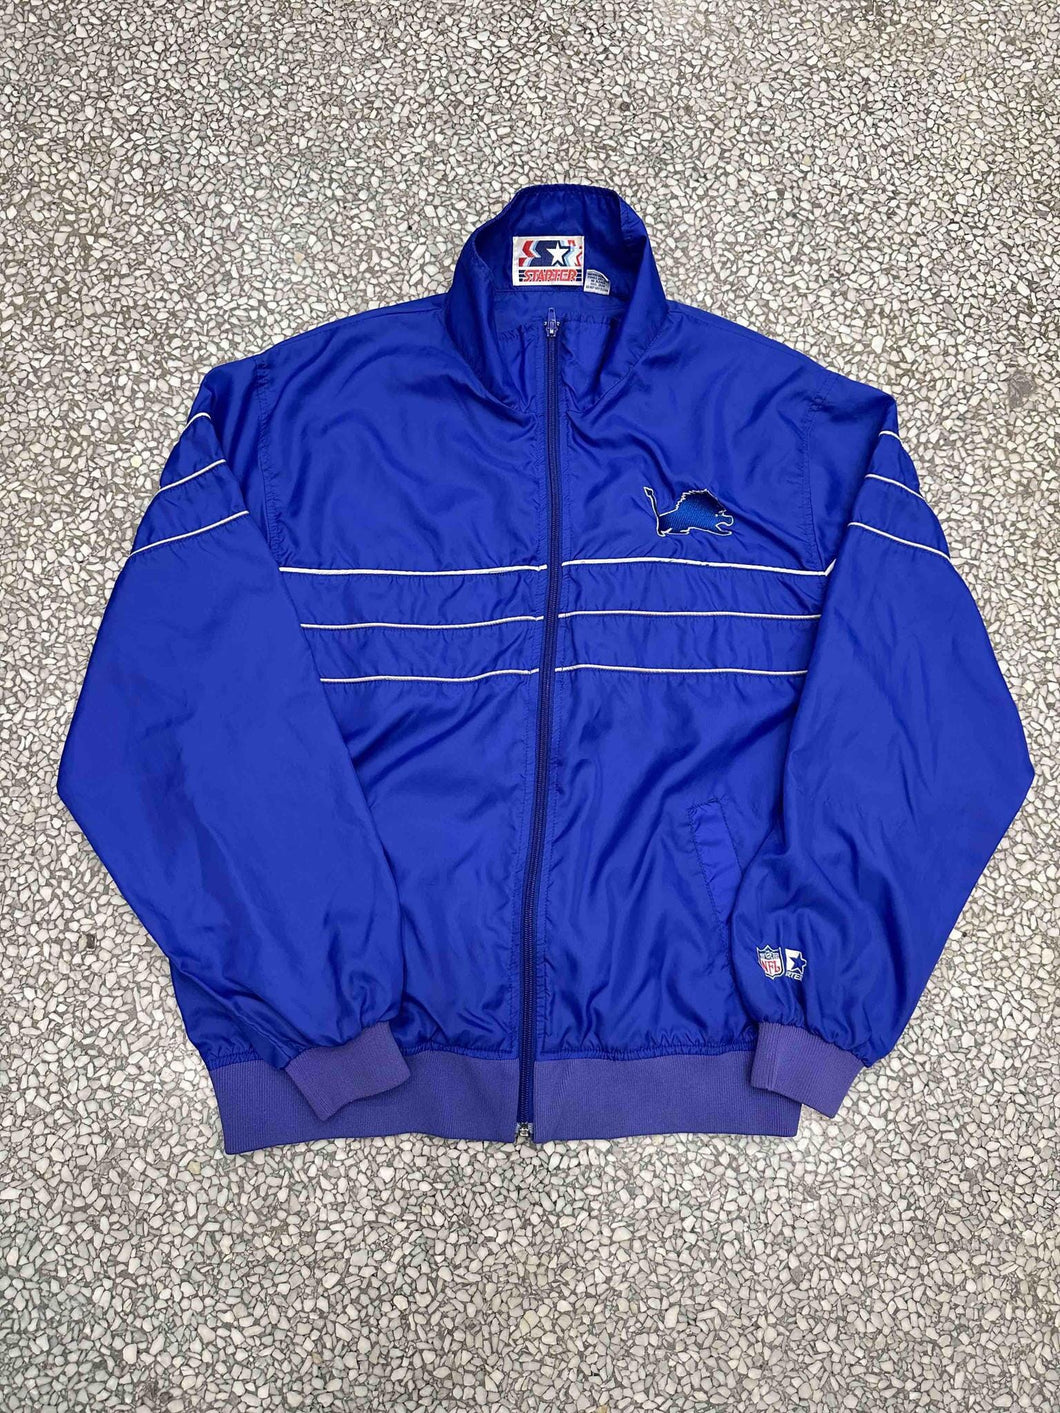 Detroit Lions Vintage 90s Starter Windbreaker Jacket Overdyed Blue ABC Vintage 